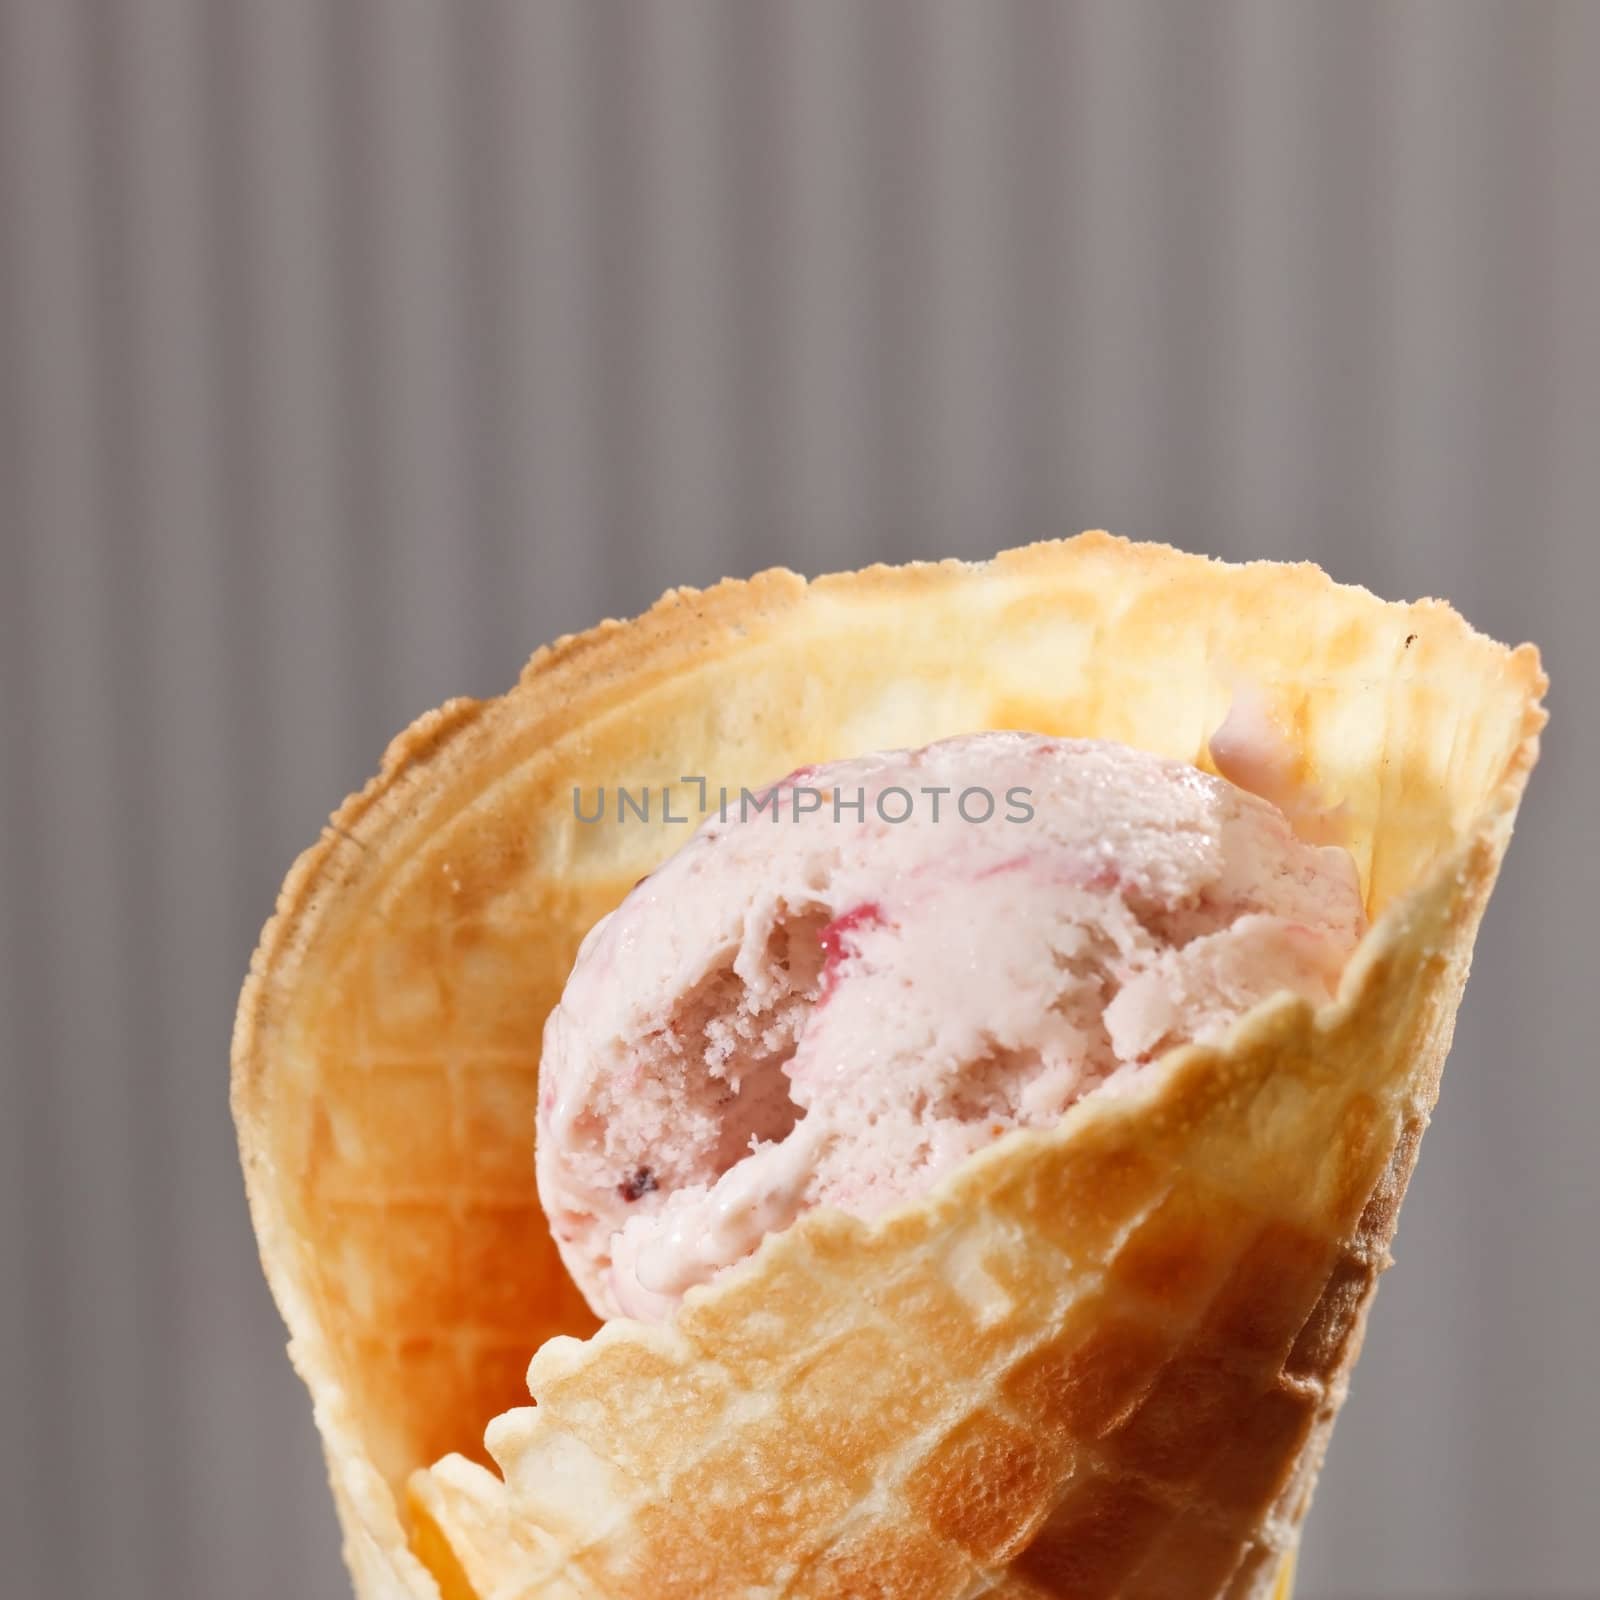 strawberry ice cream by shebeko